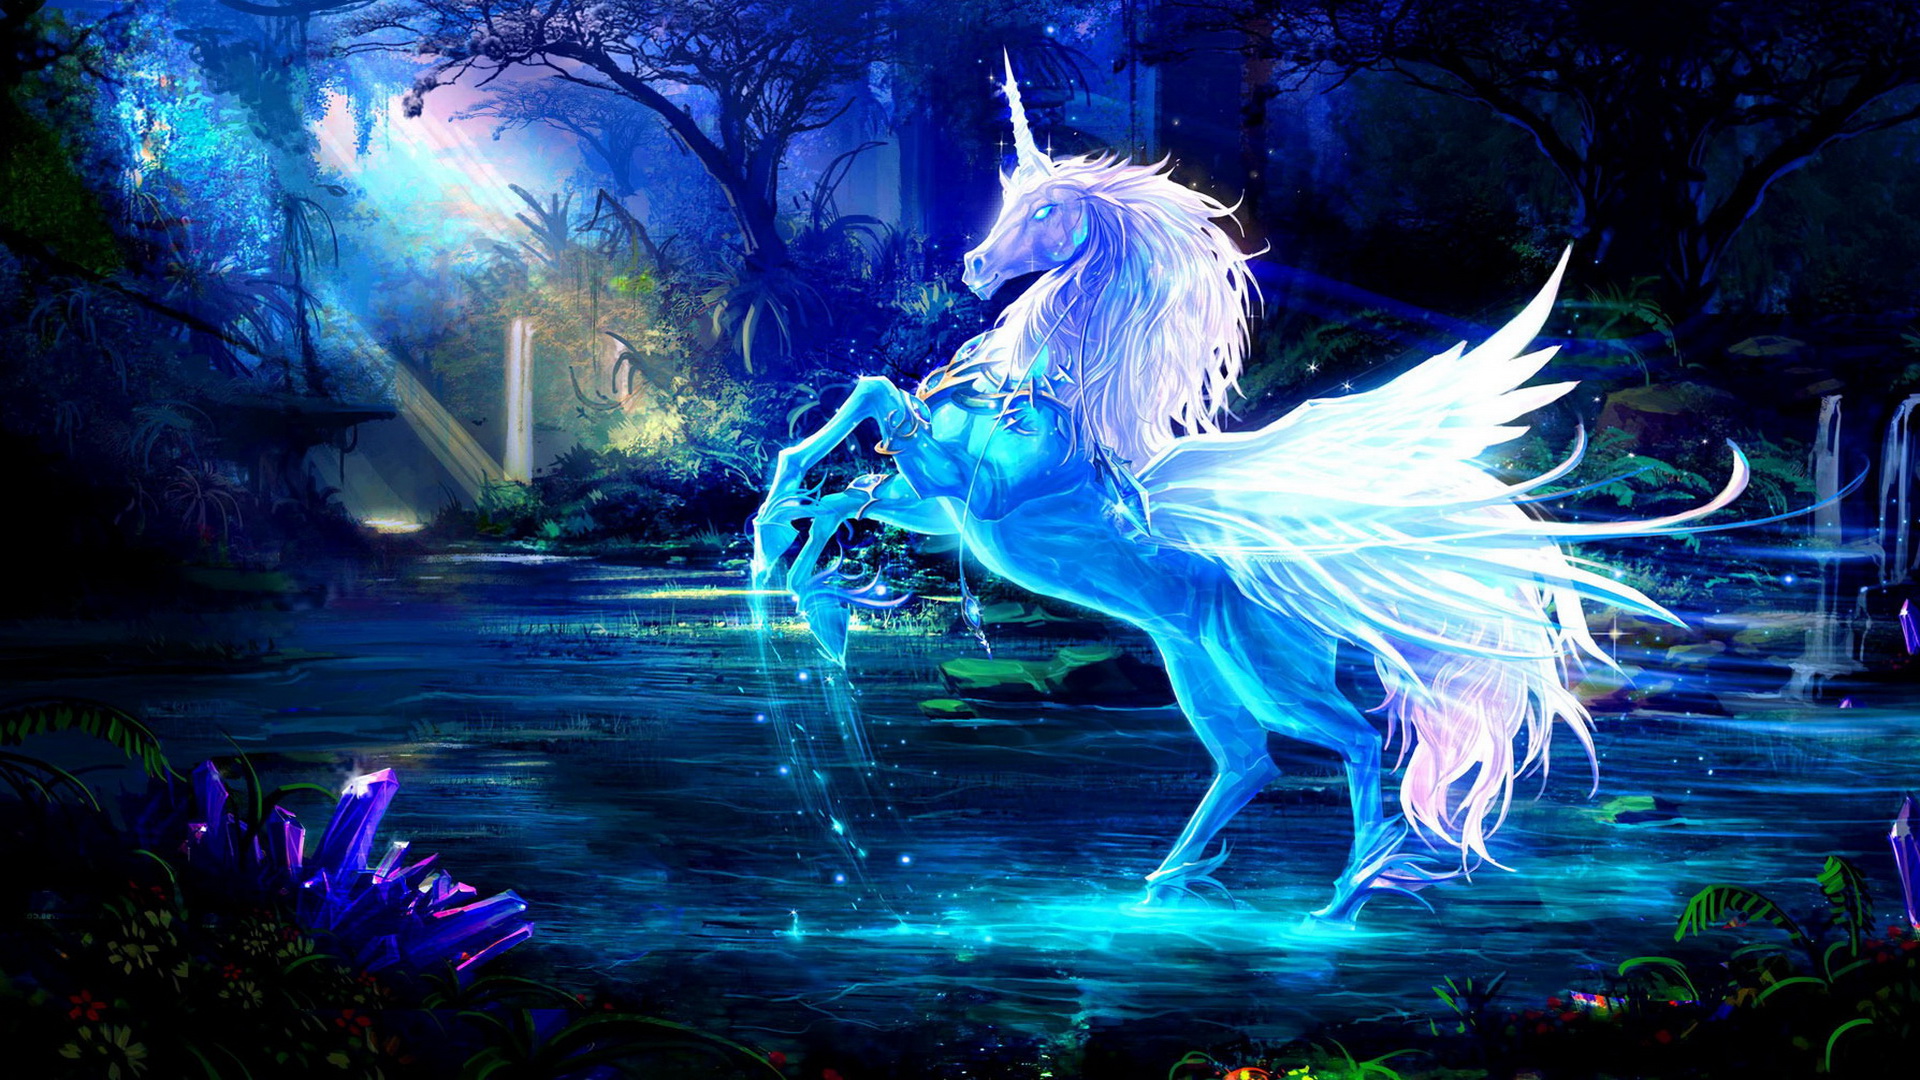 magic wallpaper download,mythical creature,fictional character,unicorn,cg artwork,mythology